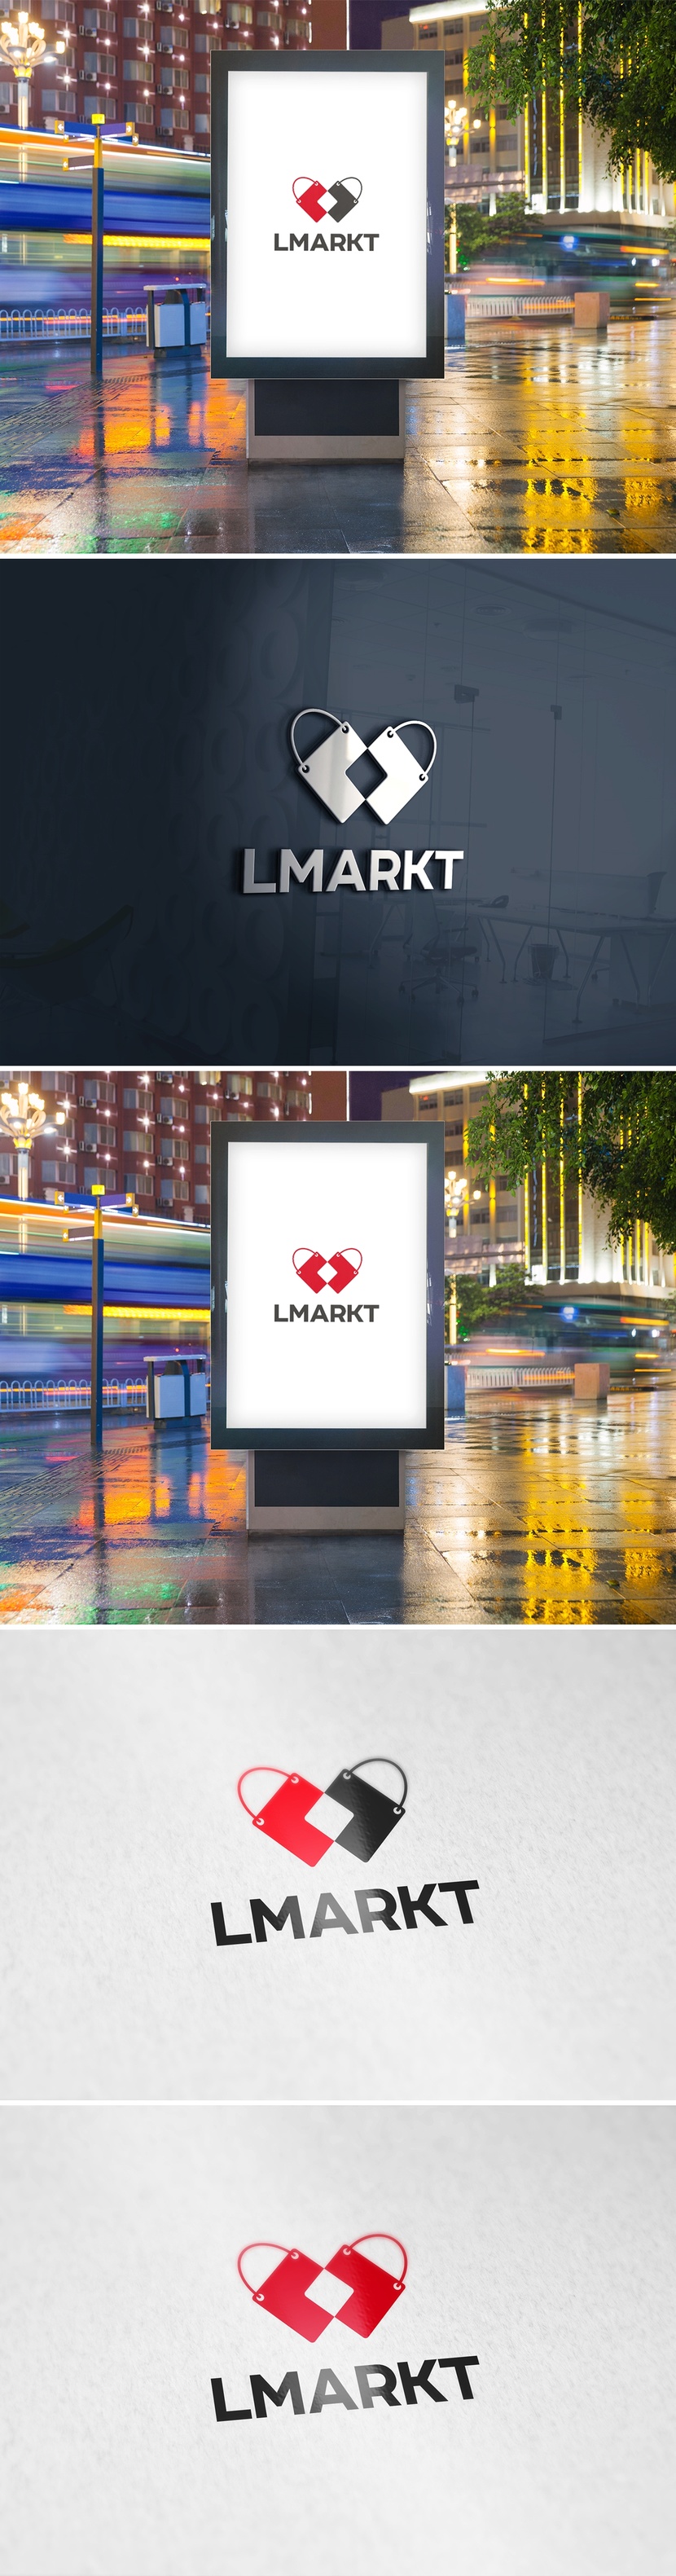 LMarkt - Создание логотипа для маркетплейса